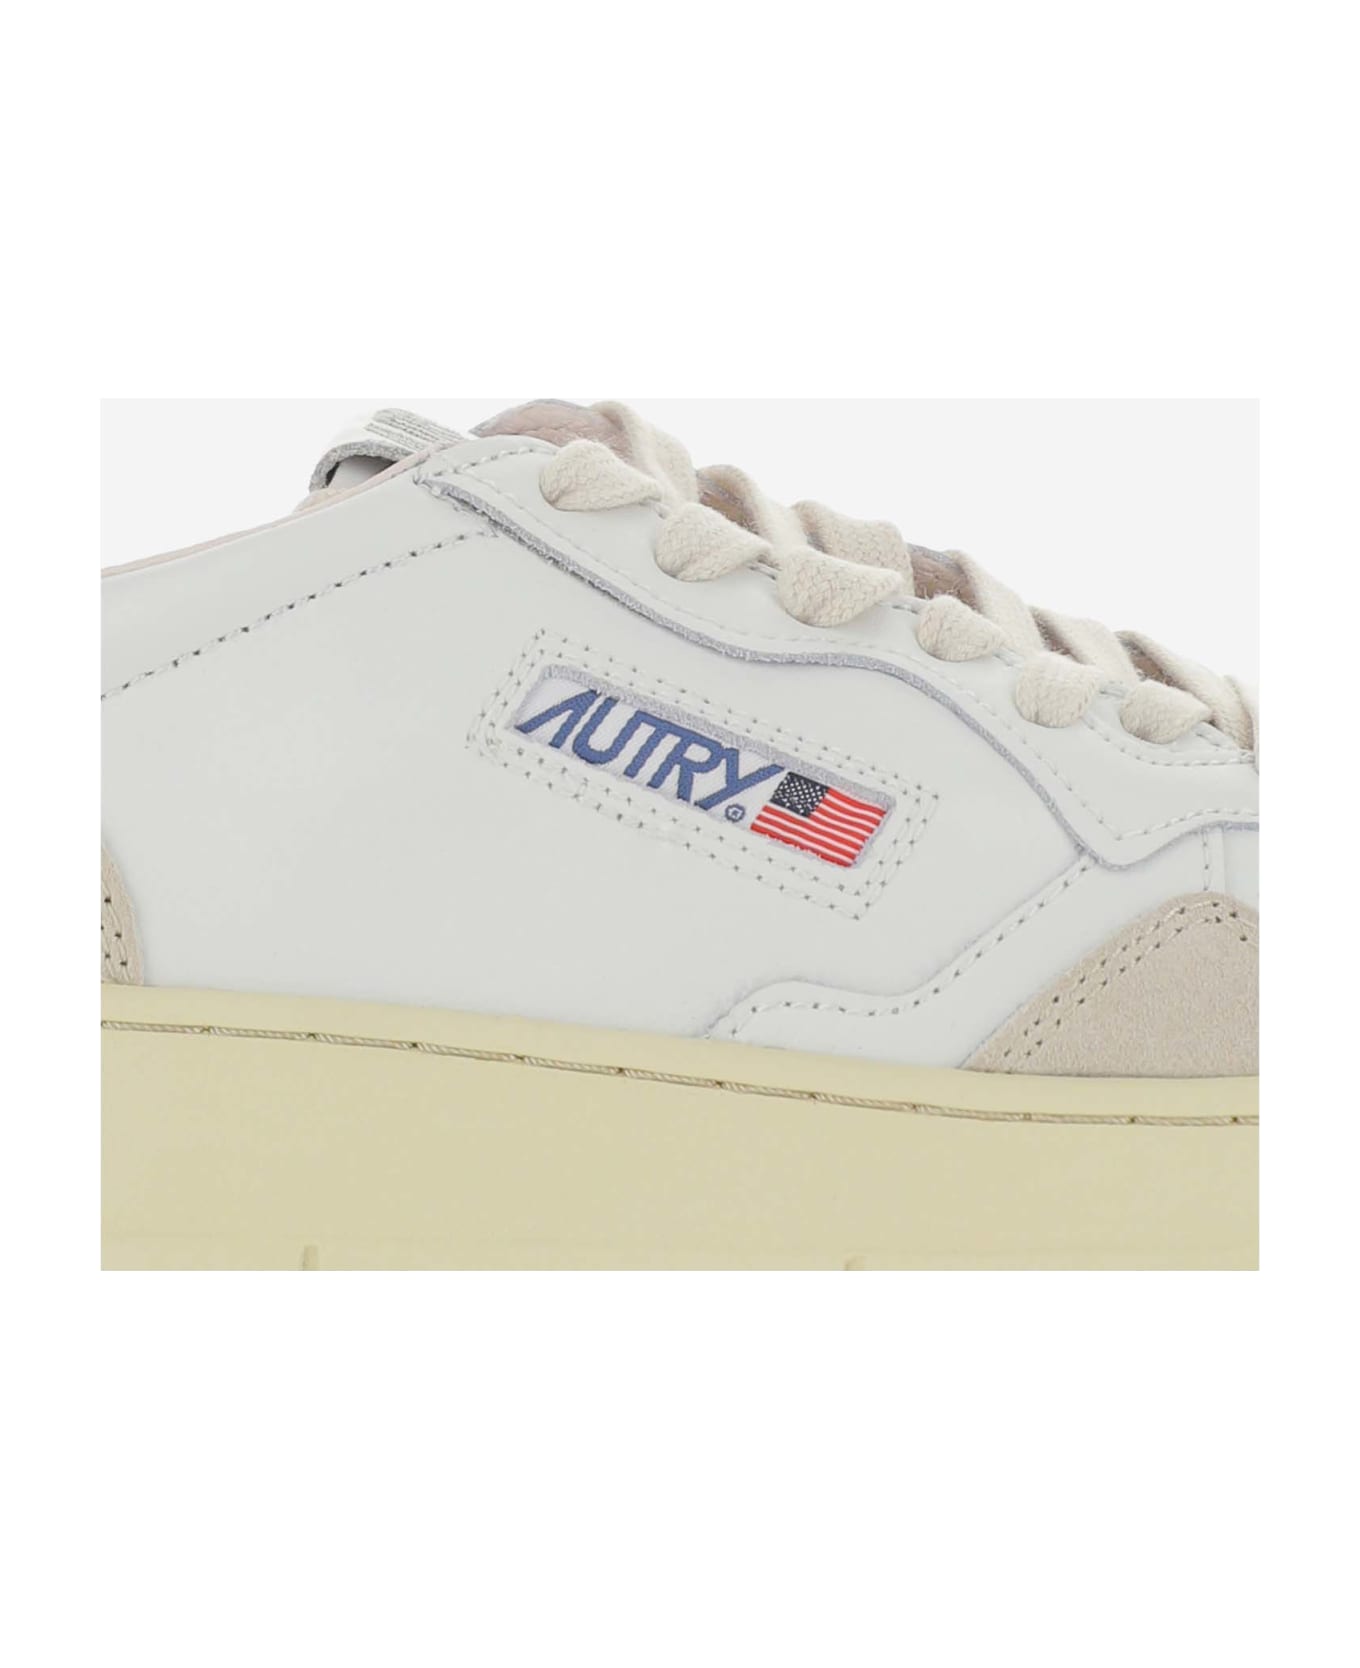 Autry Low Medalist Sneakers - Bianco/blu スニーカー